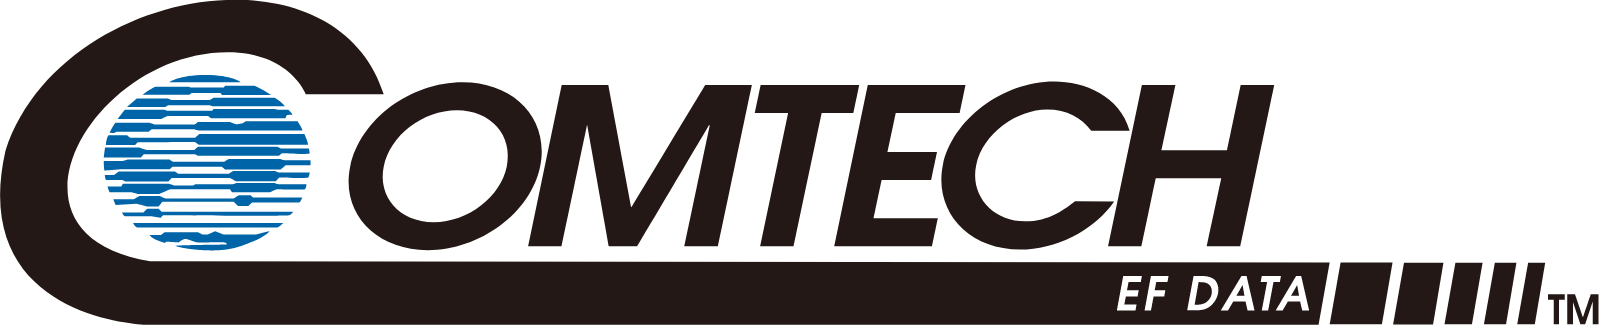 Comtech Telecommunications logo large (transparent PNG)